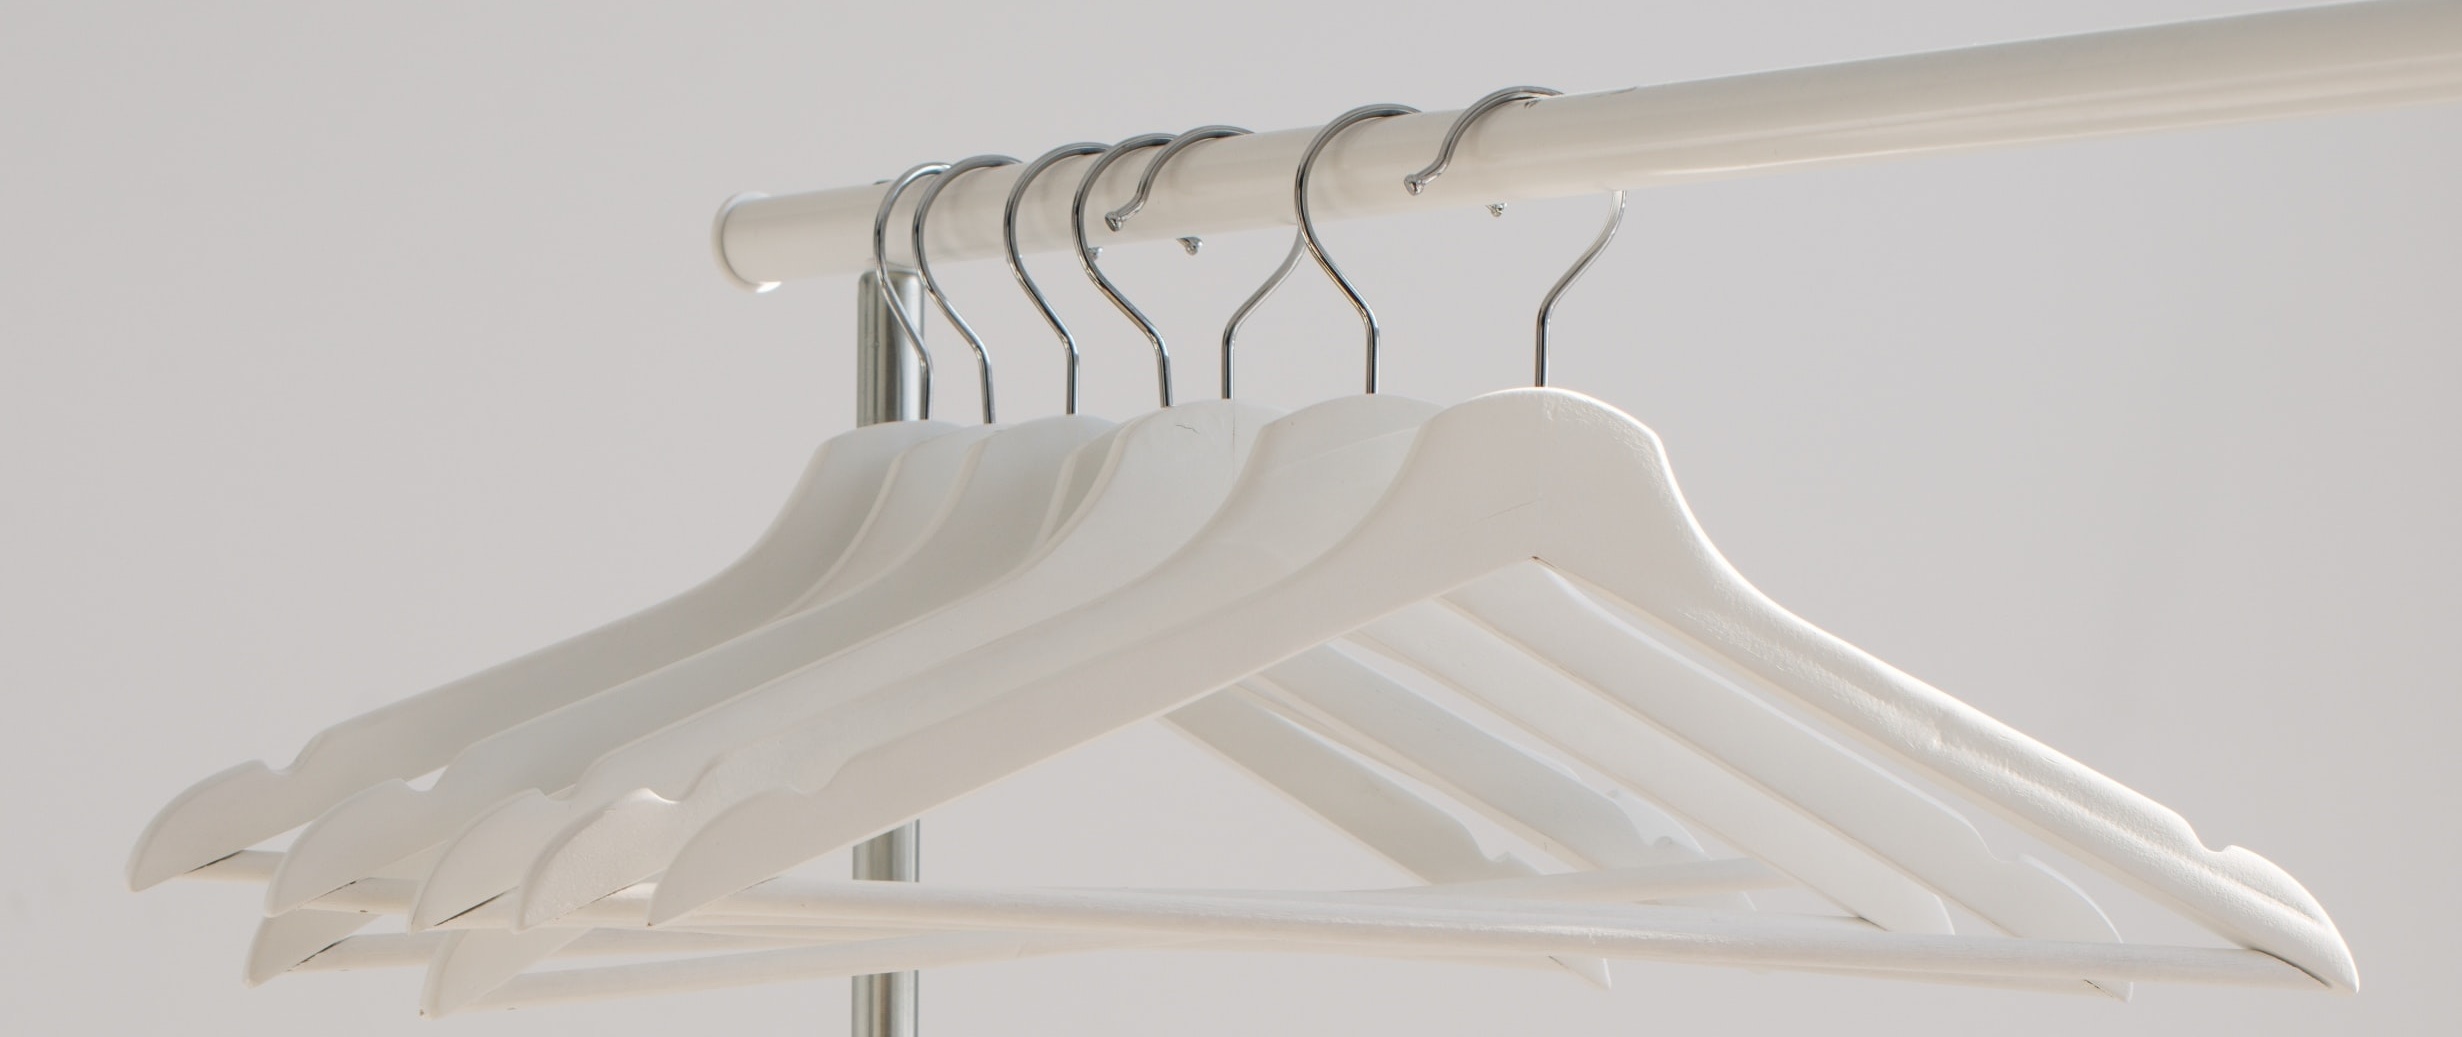 Hangers In a Closet